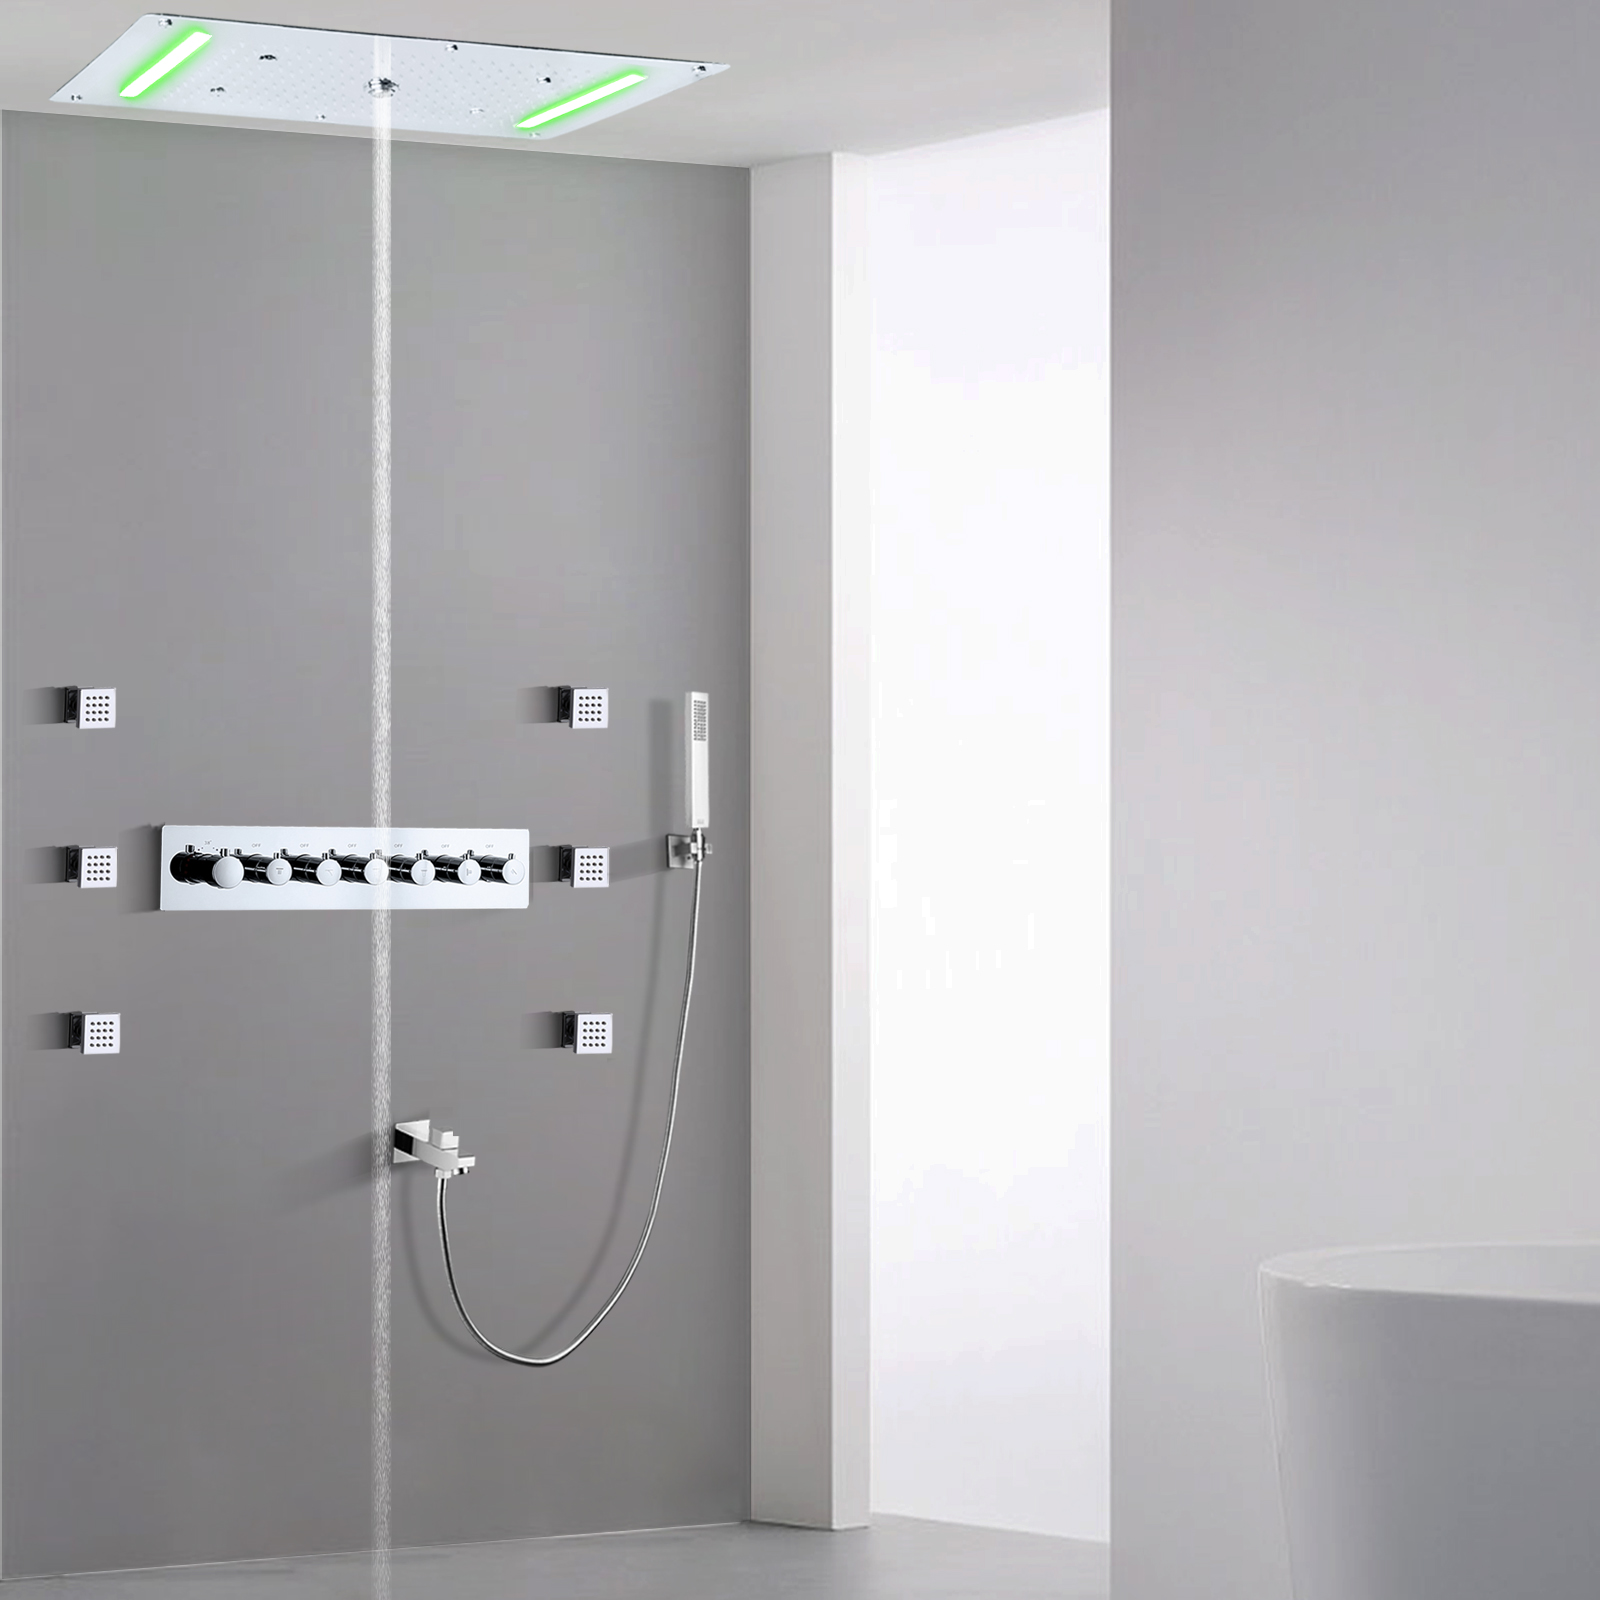 70X38 Cm Chrome Polished LED Luxury Bath Shower Mixer Waterfall Rainfall Panel Massage Shower Set